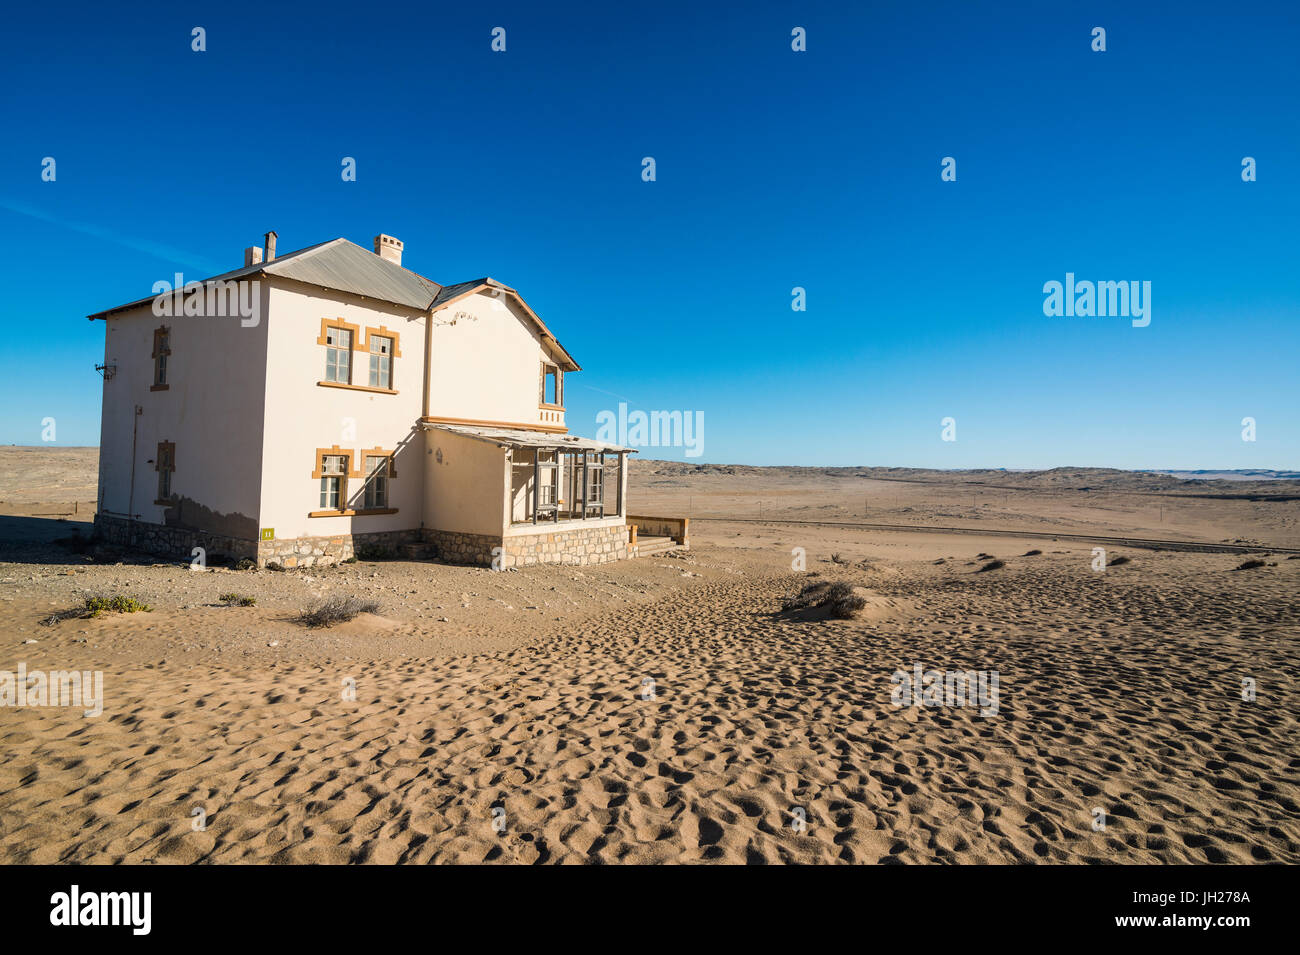 Casa coloniale, diamante vecchia città fantasma, Kolmanskop (Coleman's Hill), vicino a Luderitz, Namibia, Africa Foto Stock